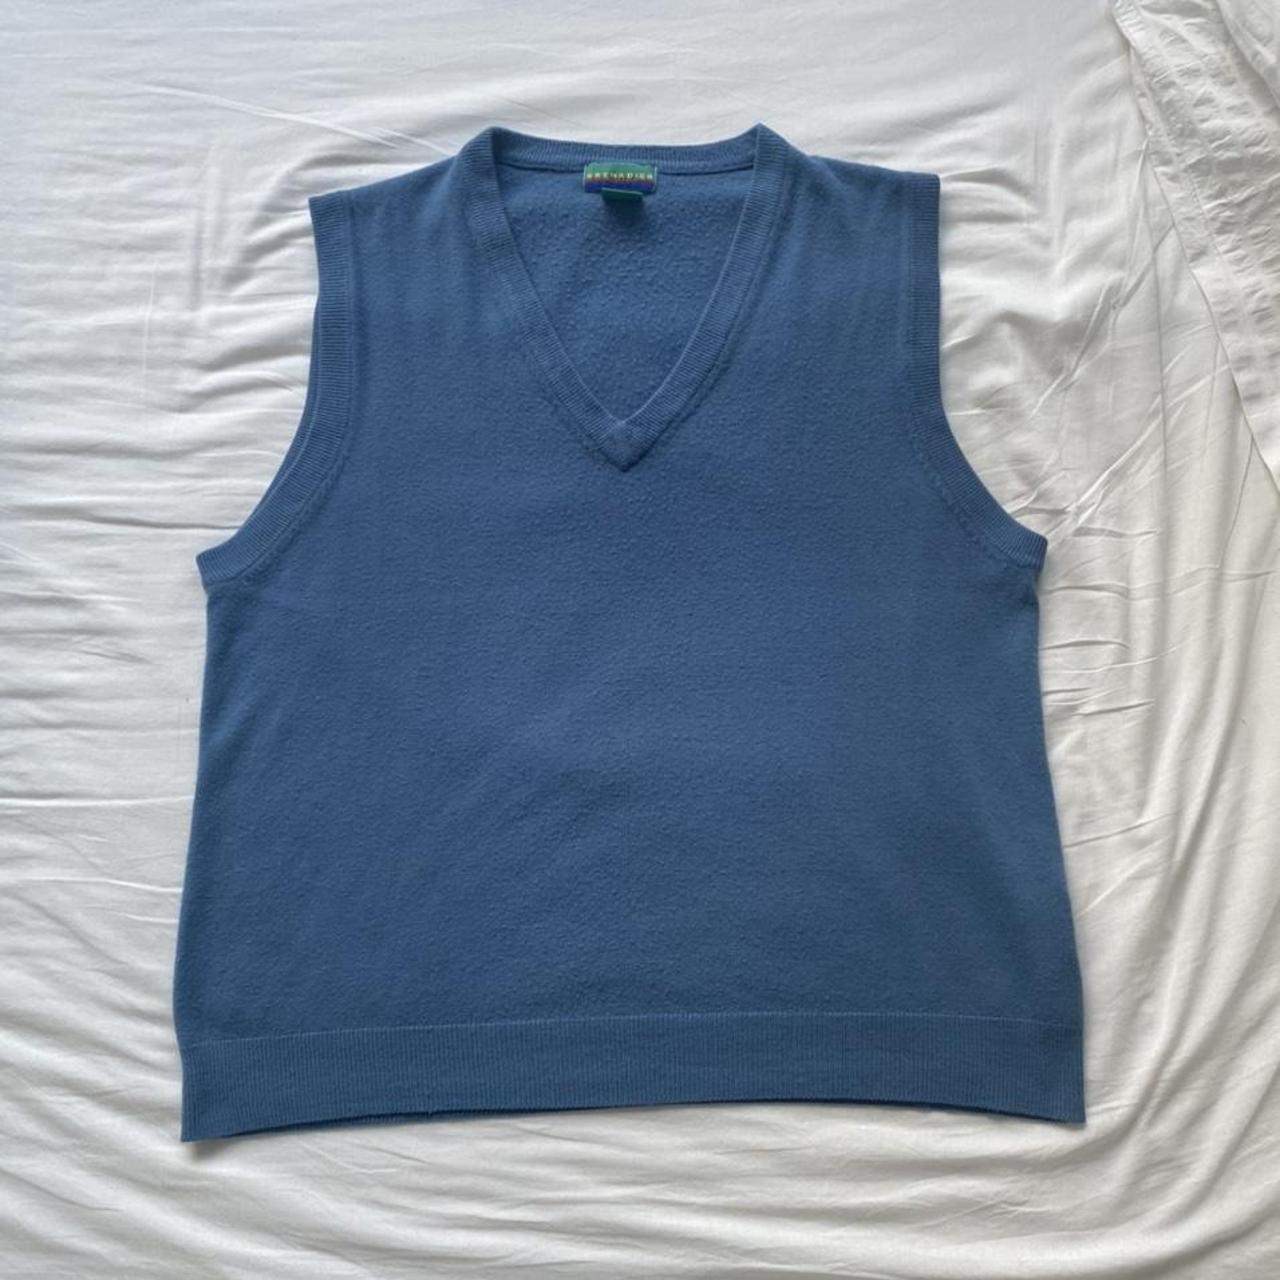 Light blue 100% acrylic sweater vest XL Soft... - Depop